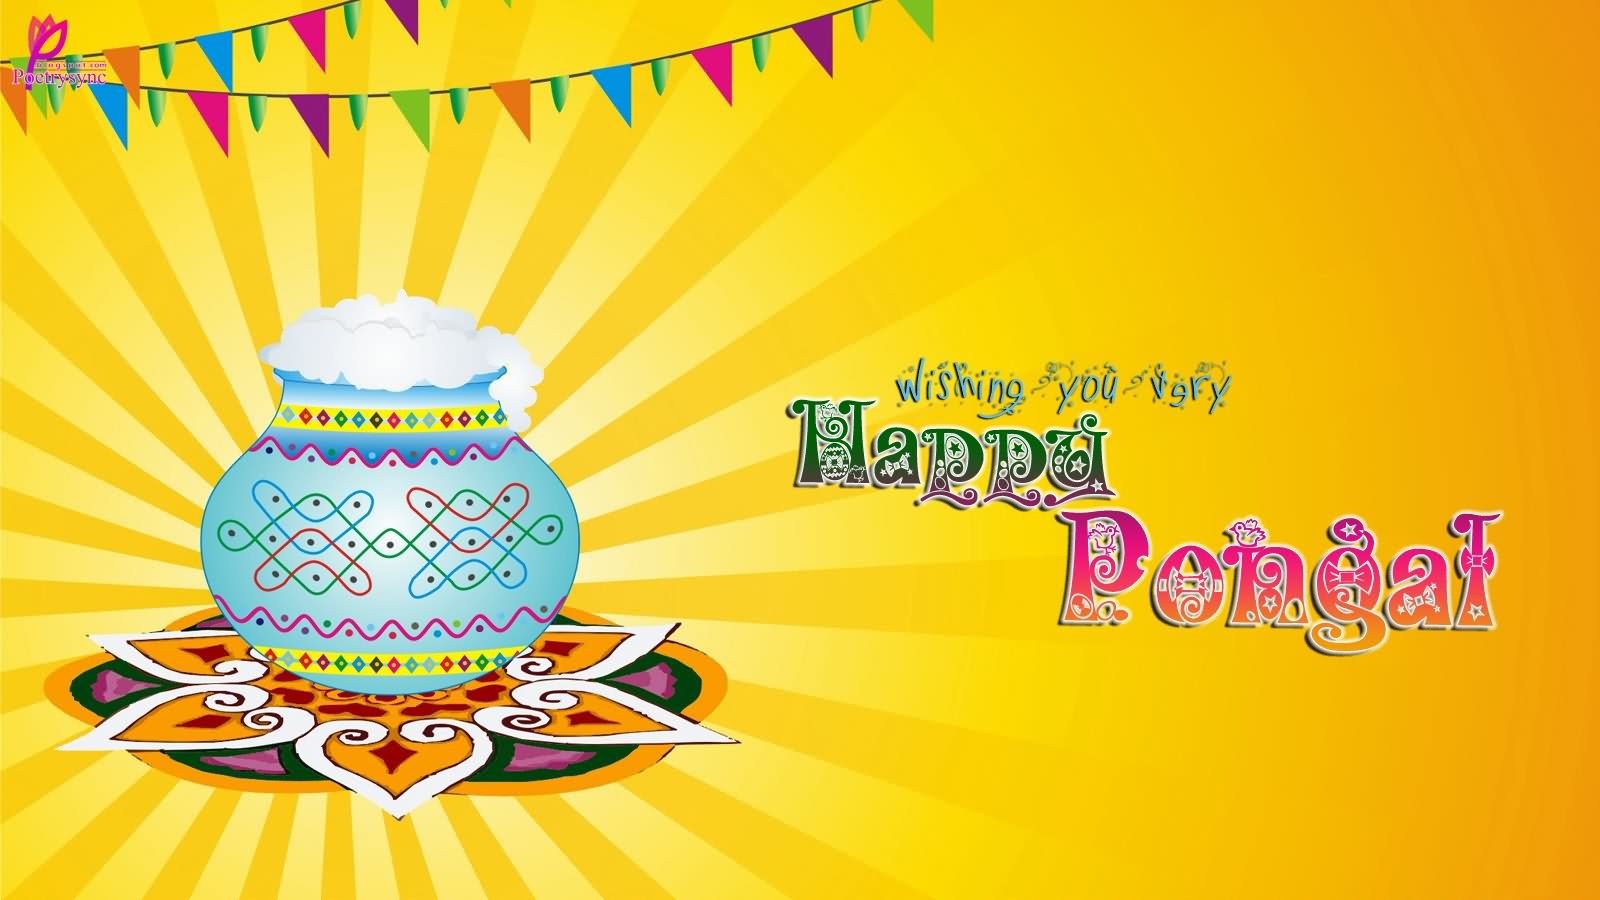 Wishing You Very Happy Pongal Greetings Wallpaper